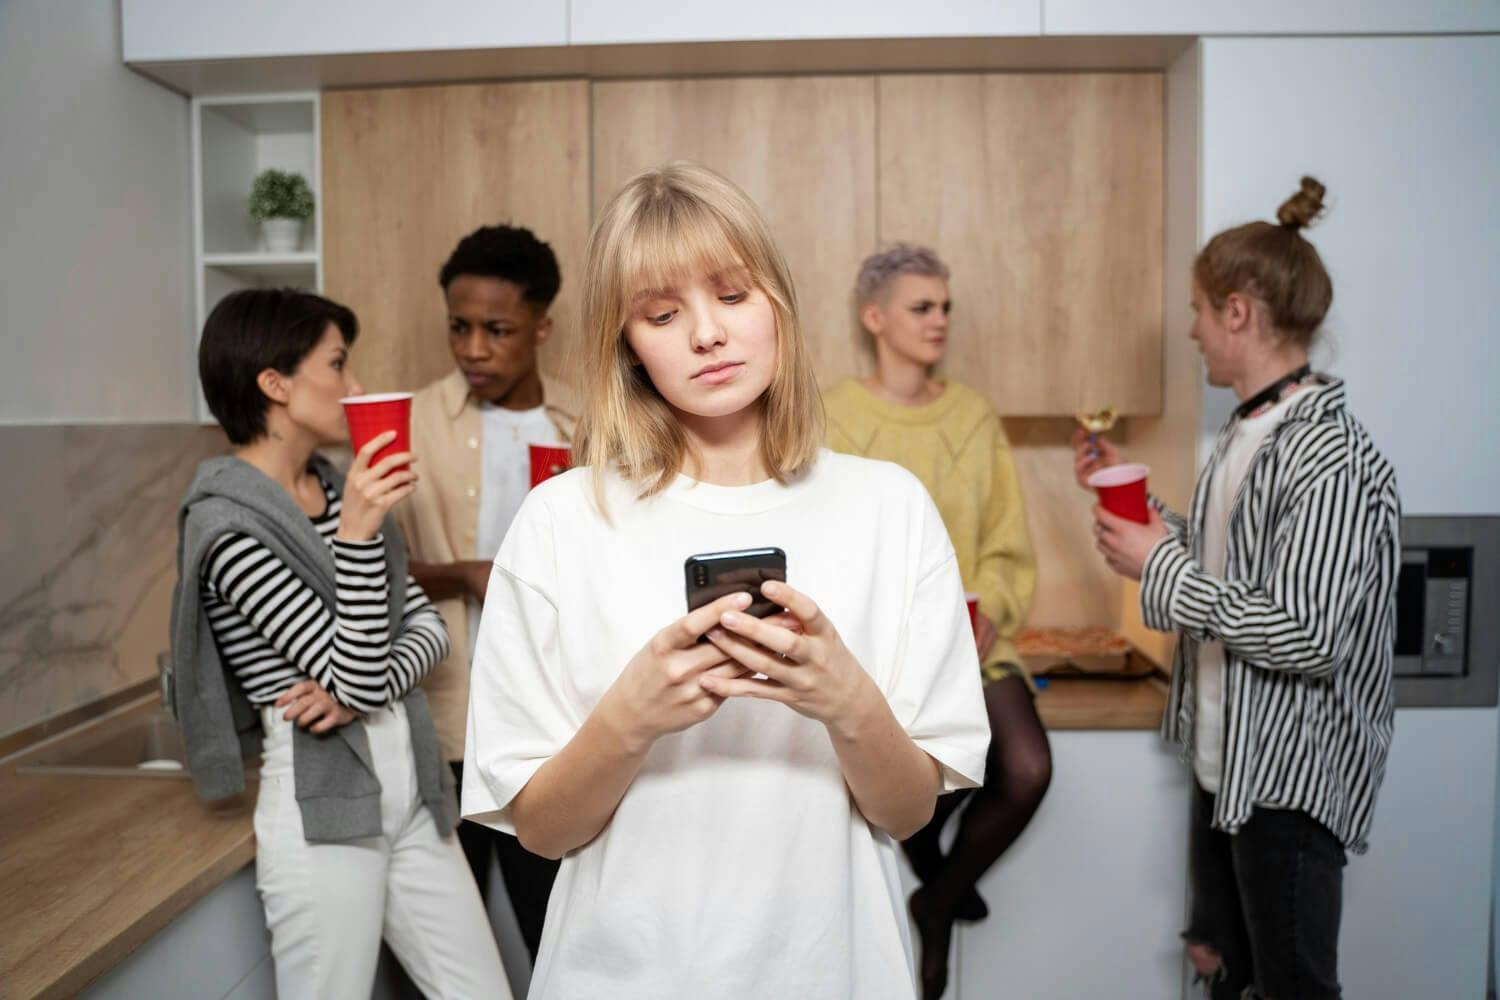 Is Social Media Making Us Unsocial